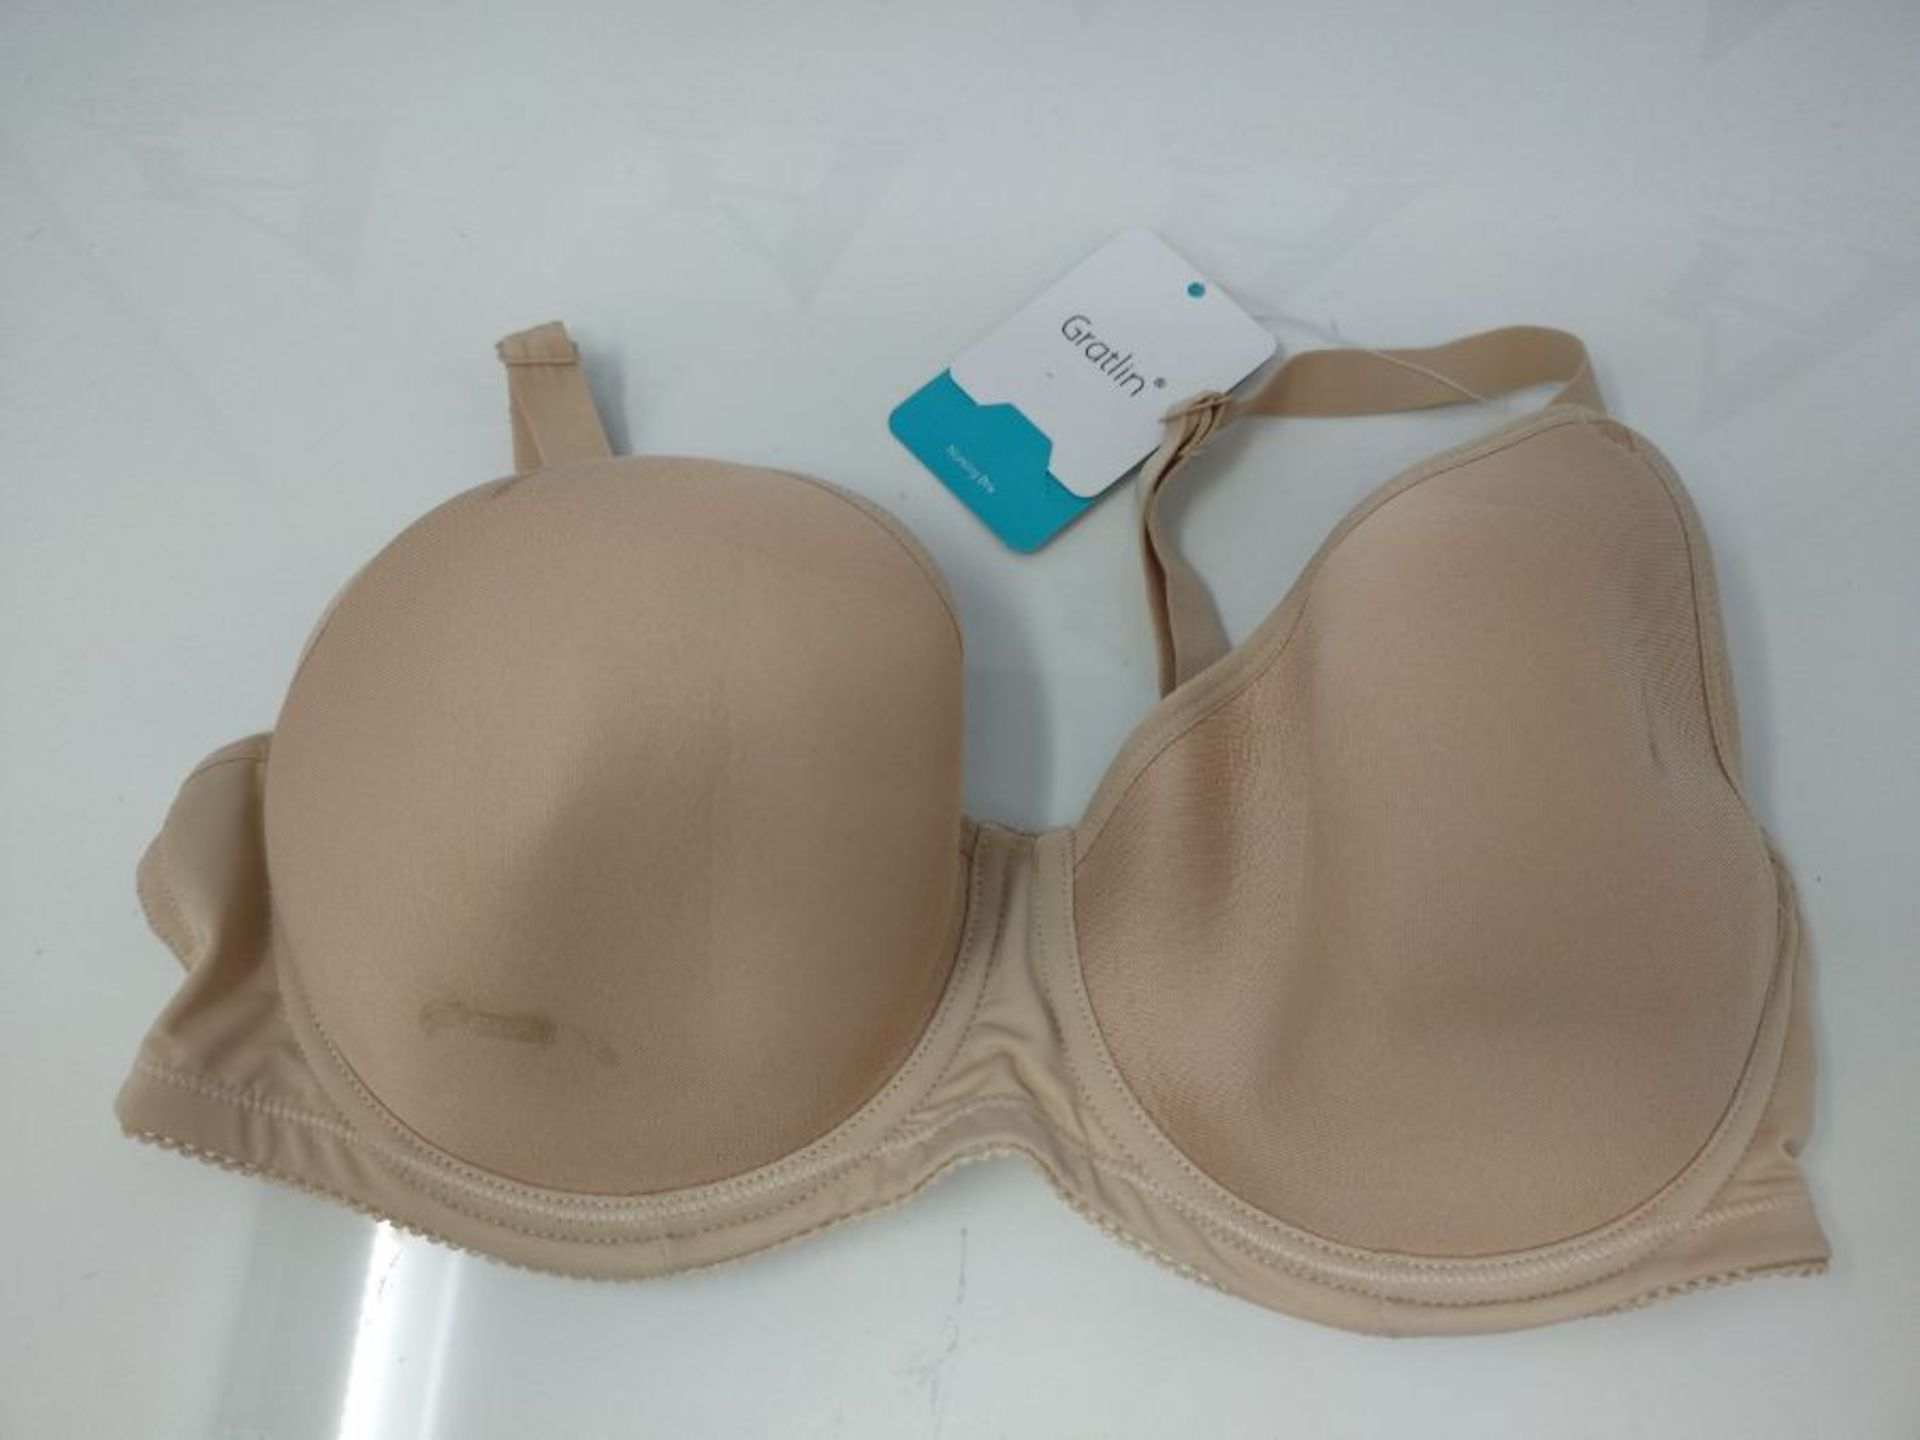 Gratlin Women's Underwire Support Padded Meternity Nursing Bra Breastfeeding Nude 34DD - Image 2 of 2